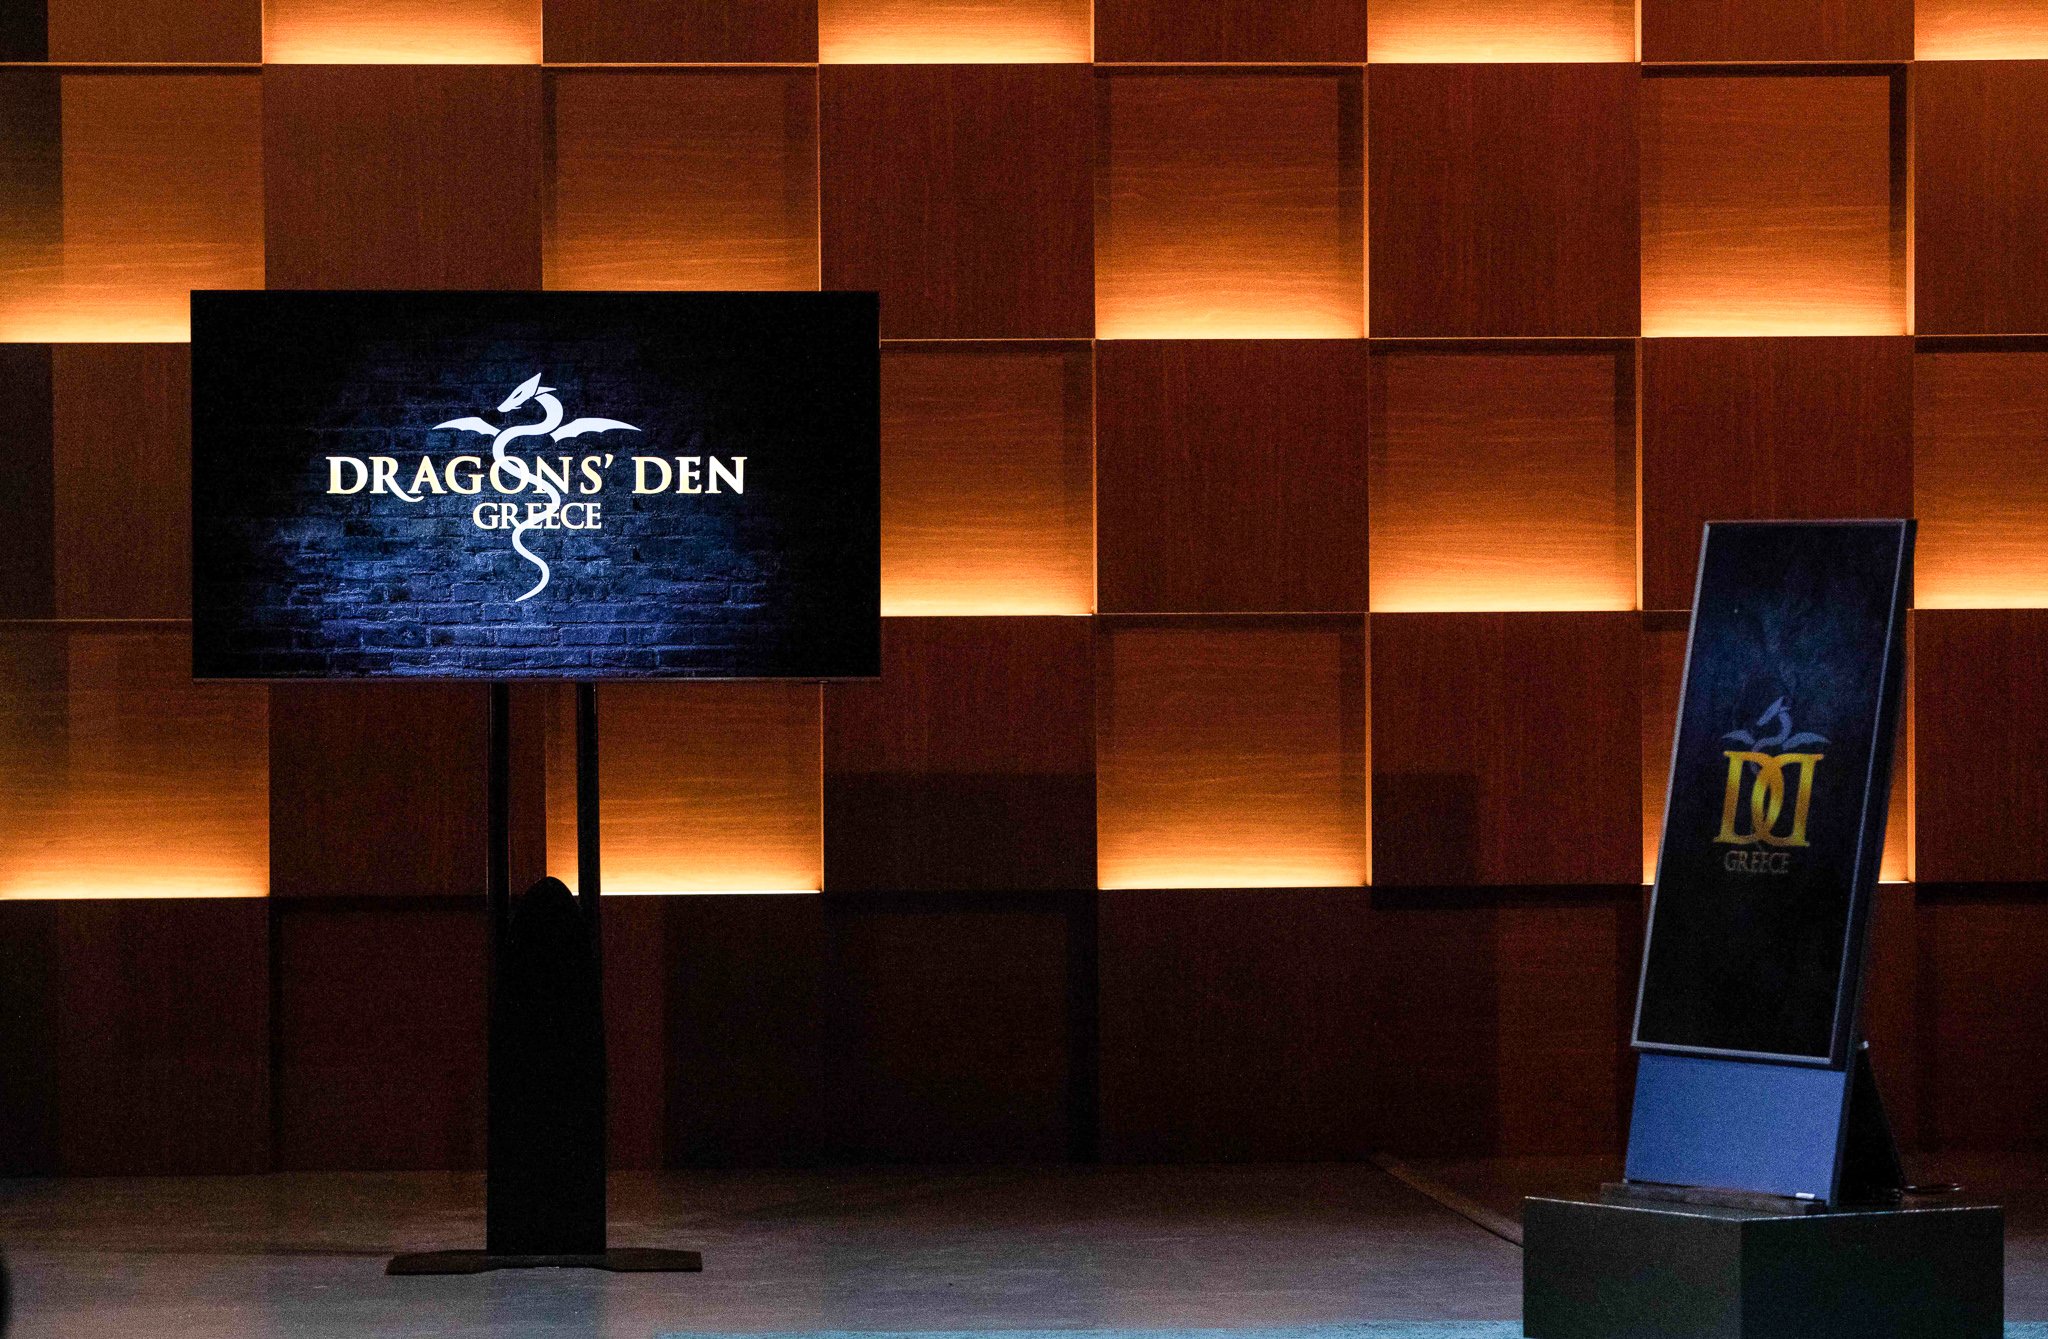 “Dragon’s Den”: Ξεκίνησαν τα γυρίσματα του επιτυχημένου show επενδύσεων 